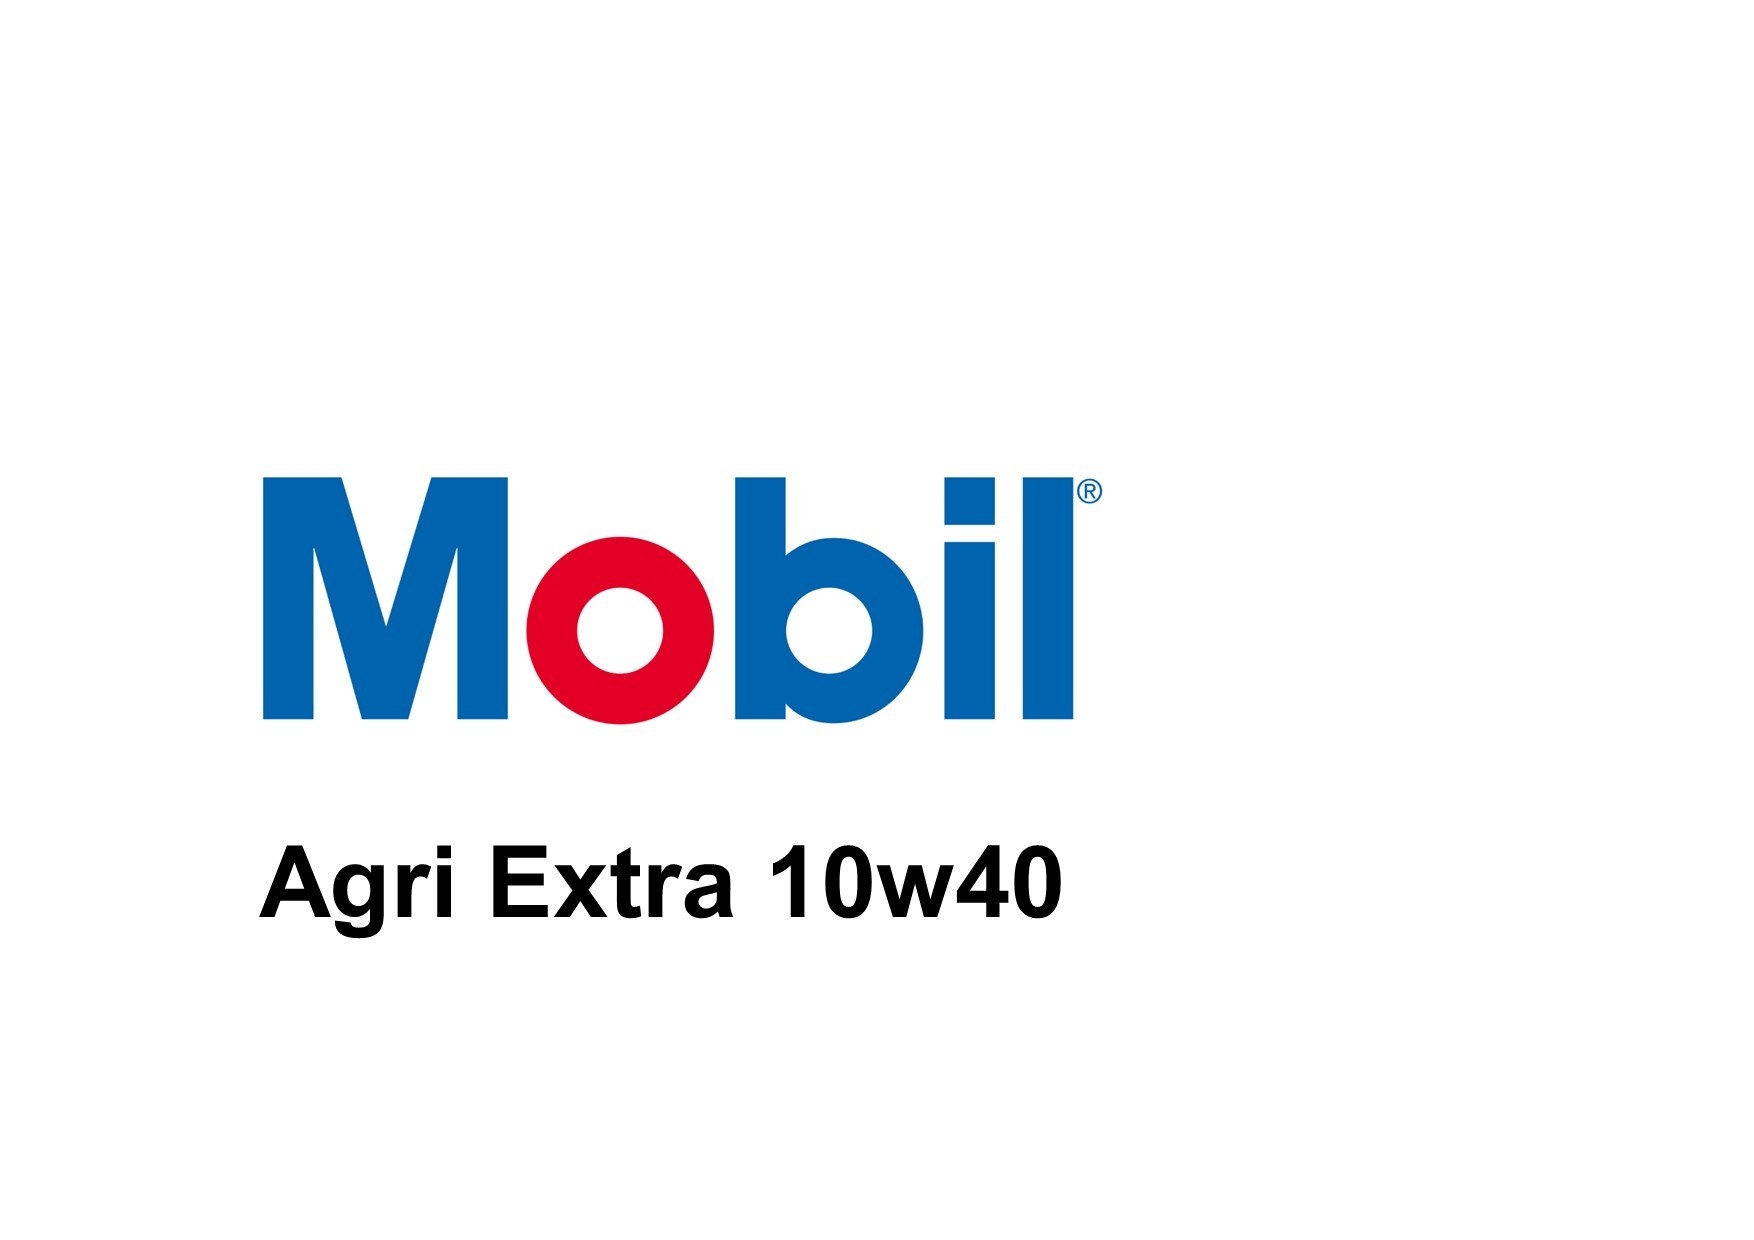 Mobil agri extra 10w 40